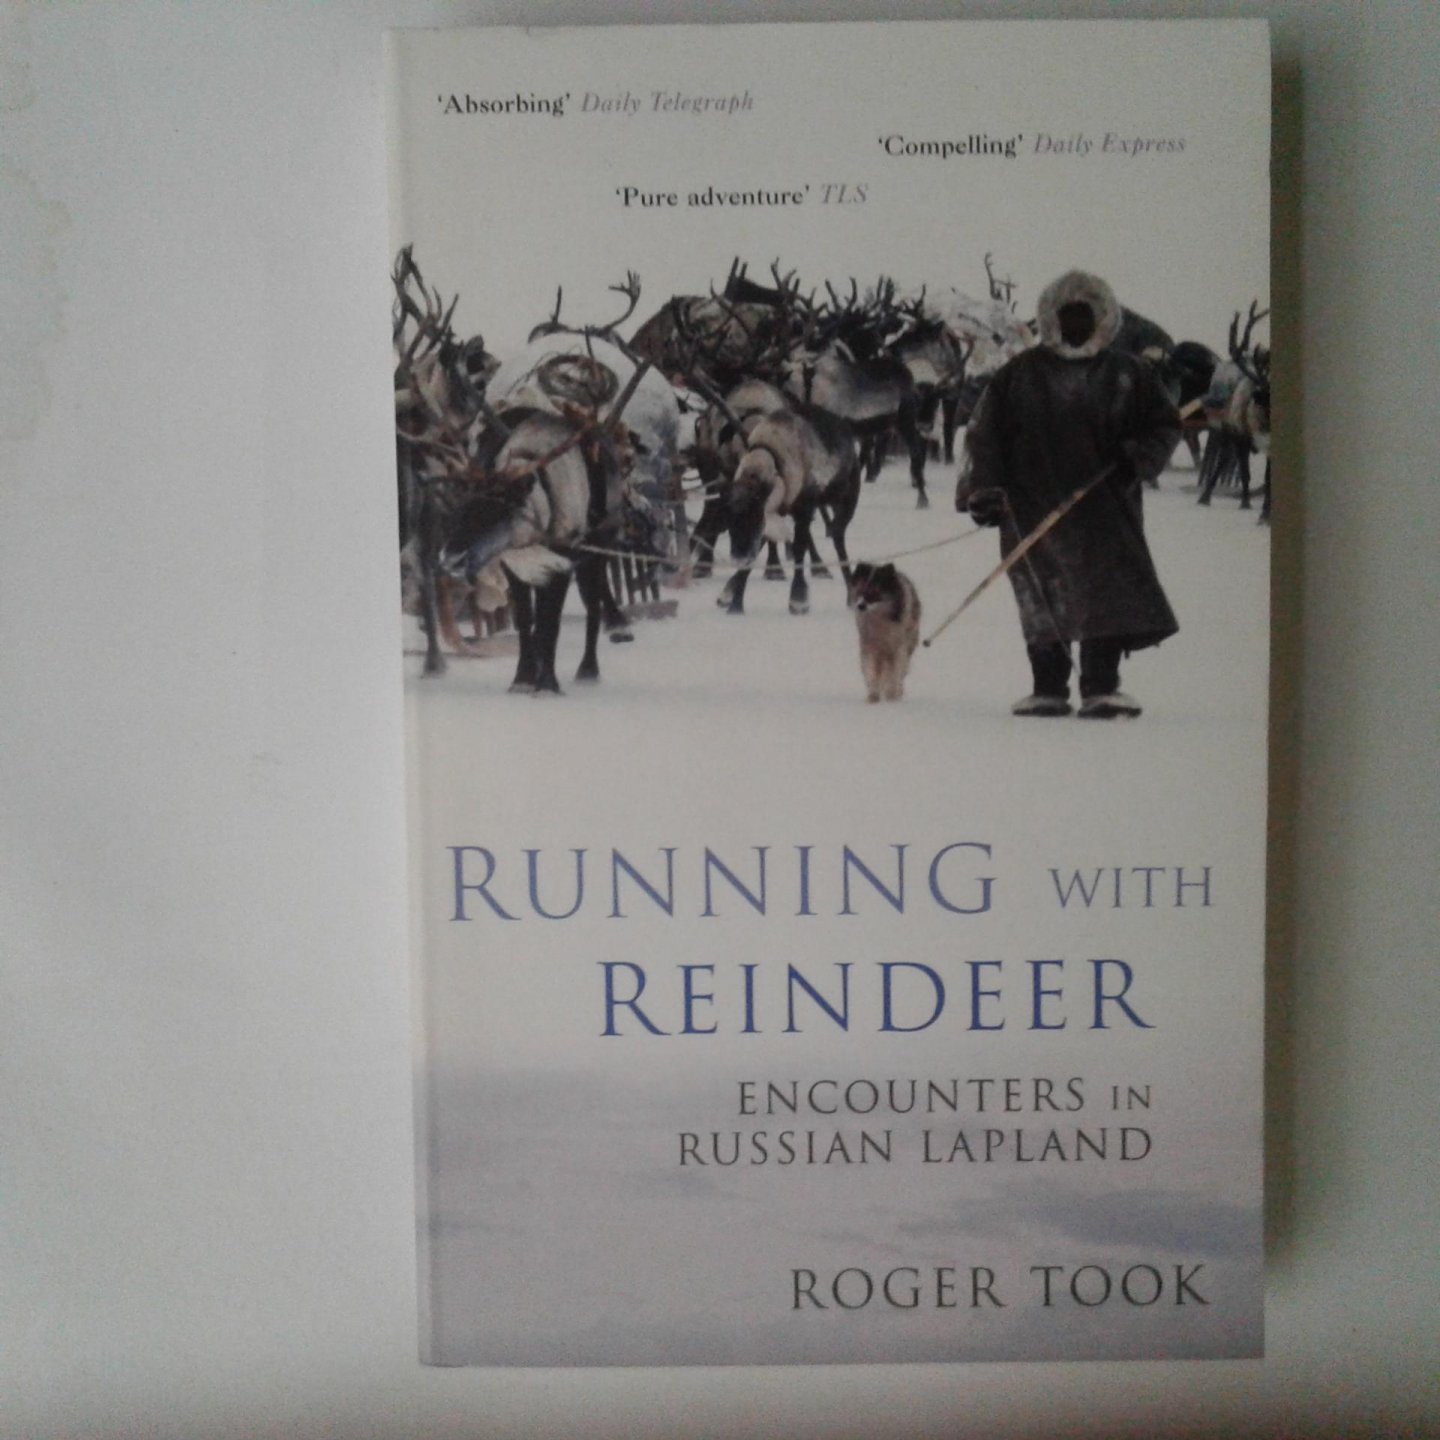 Took, Roger - Running With Reindeer ; Encounters in Russian Lapland